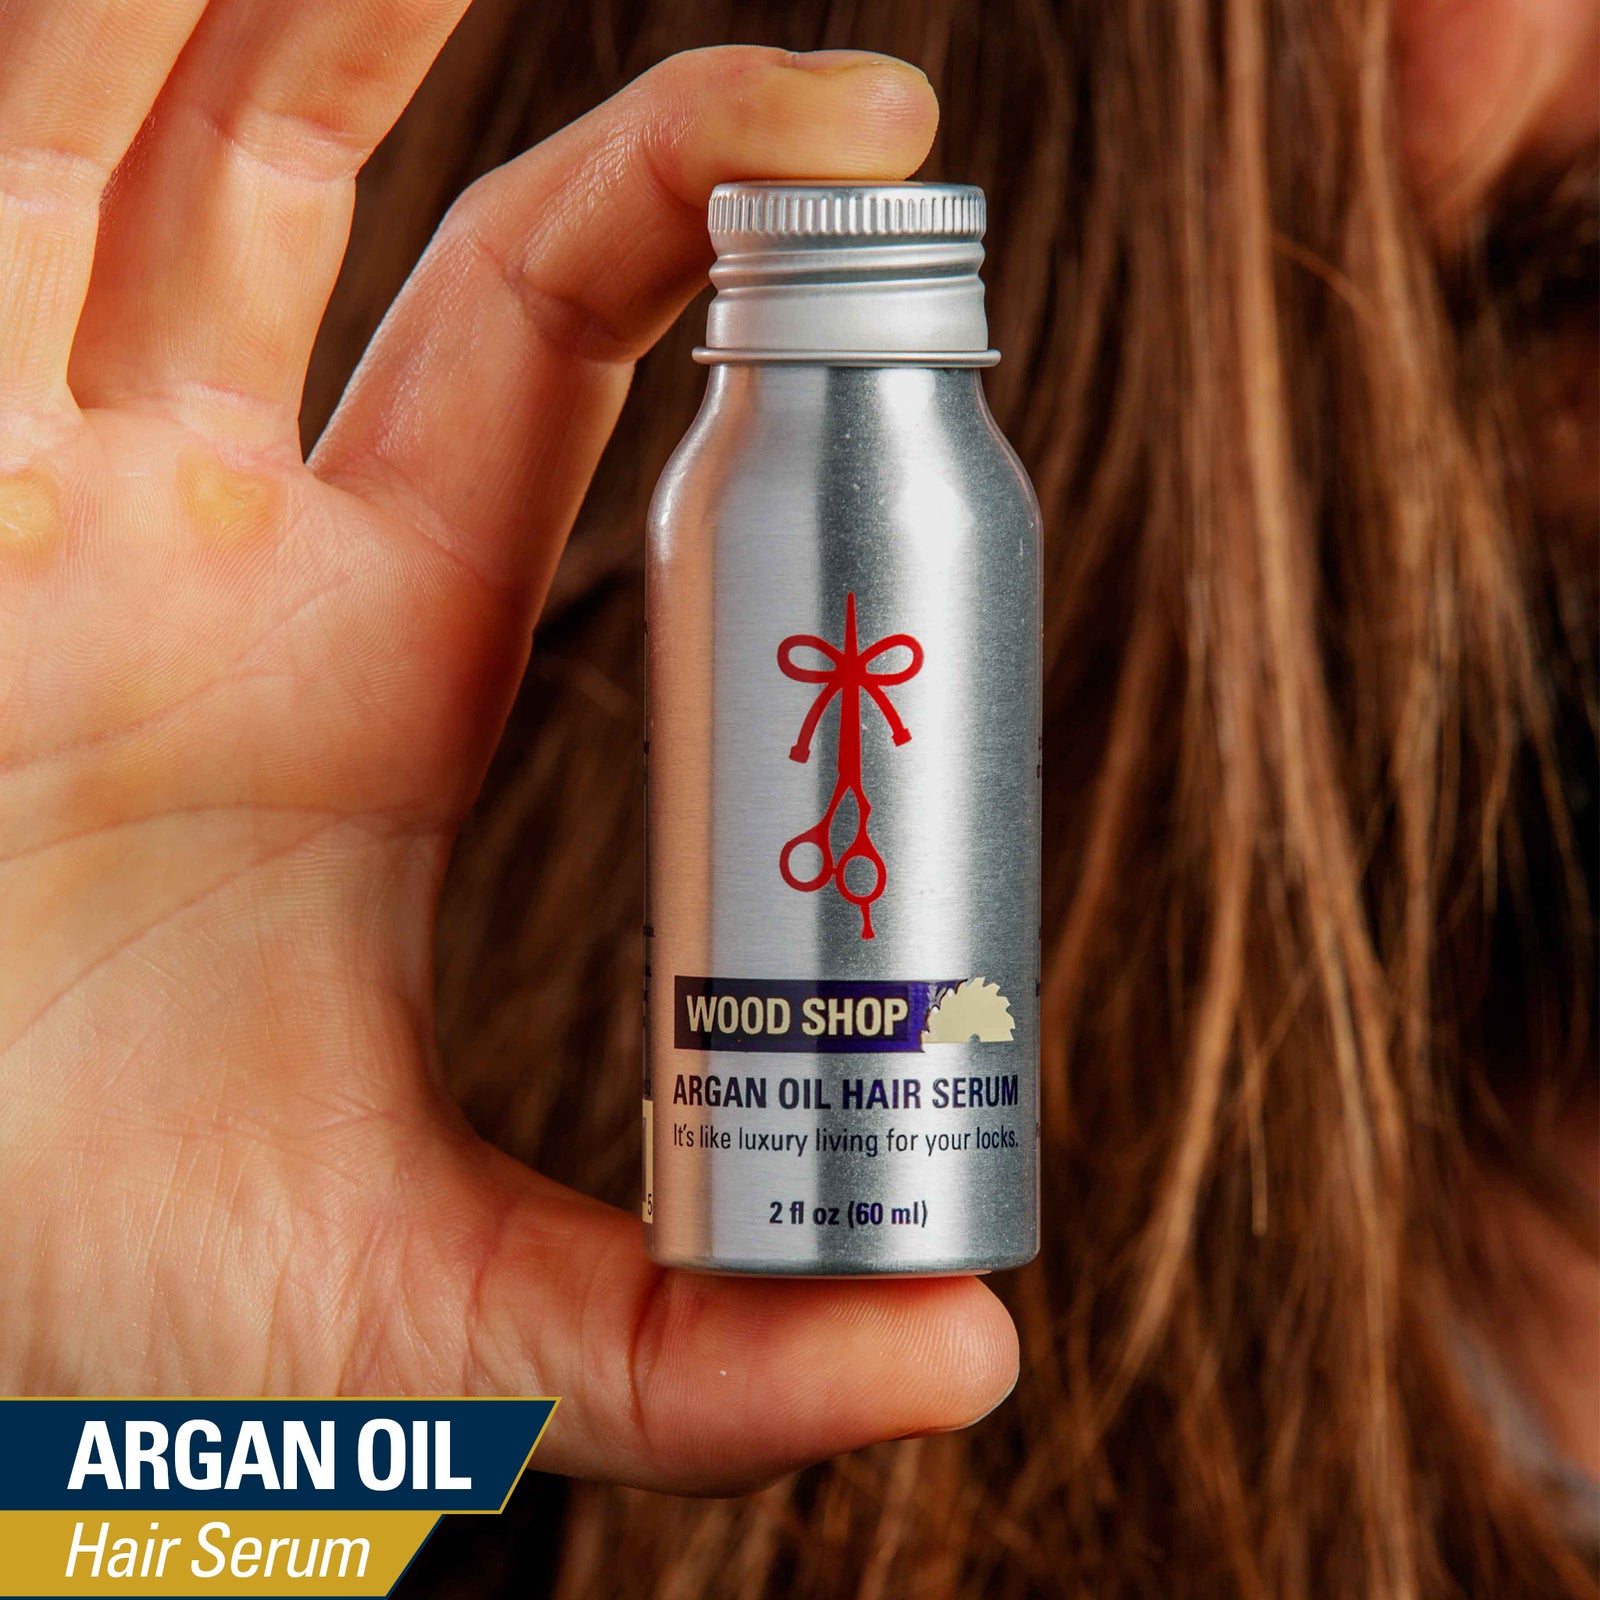 The Longhairs Argan Oil Hair Serum